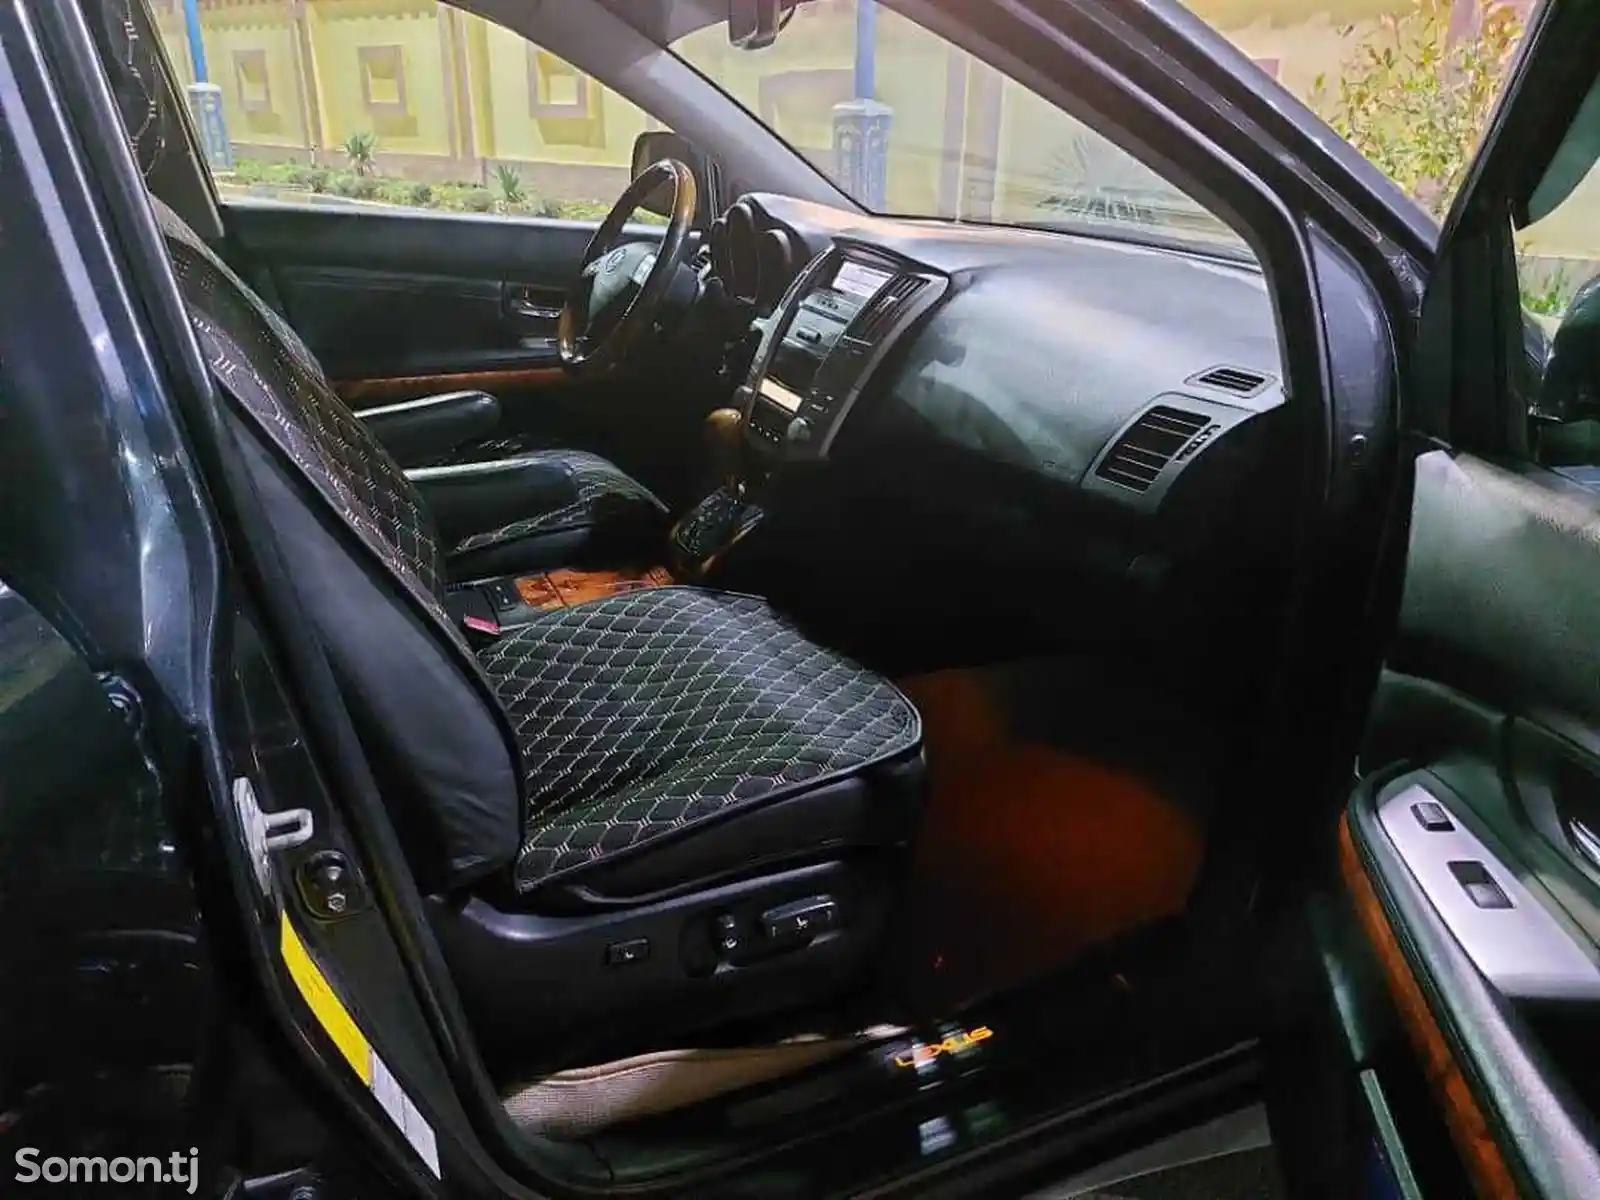 Lexus RX series, 2007-3